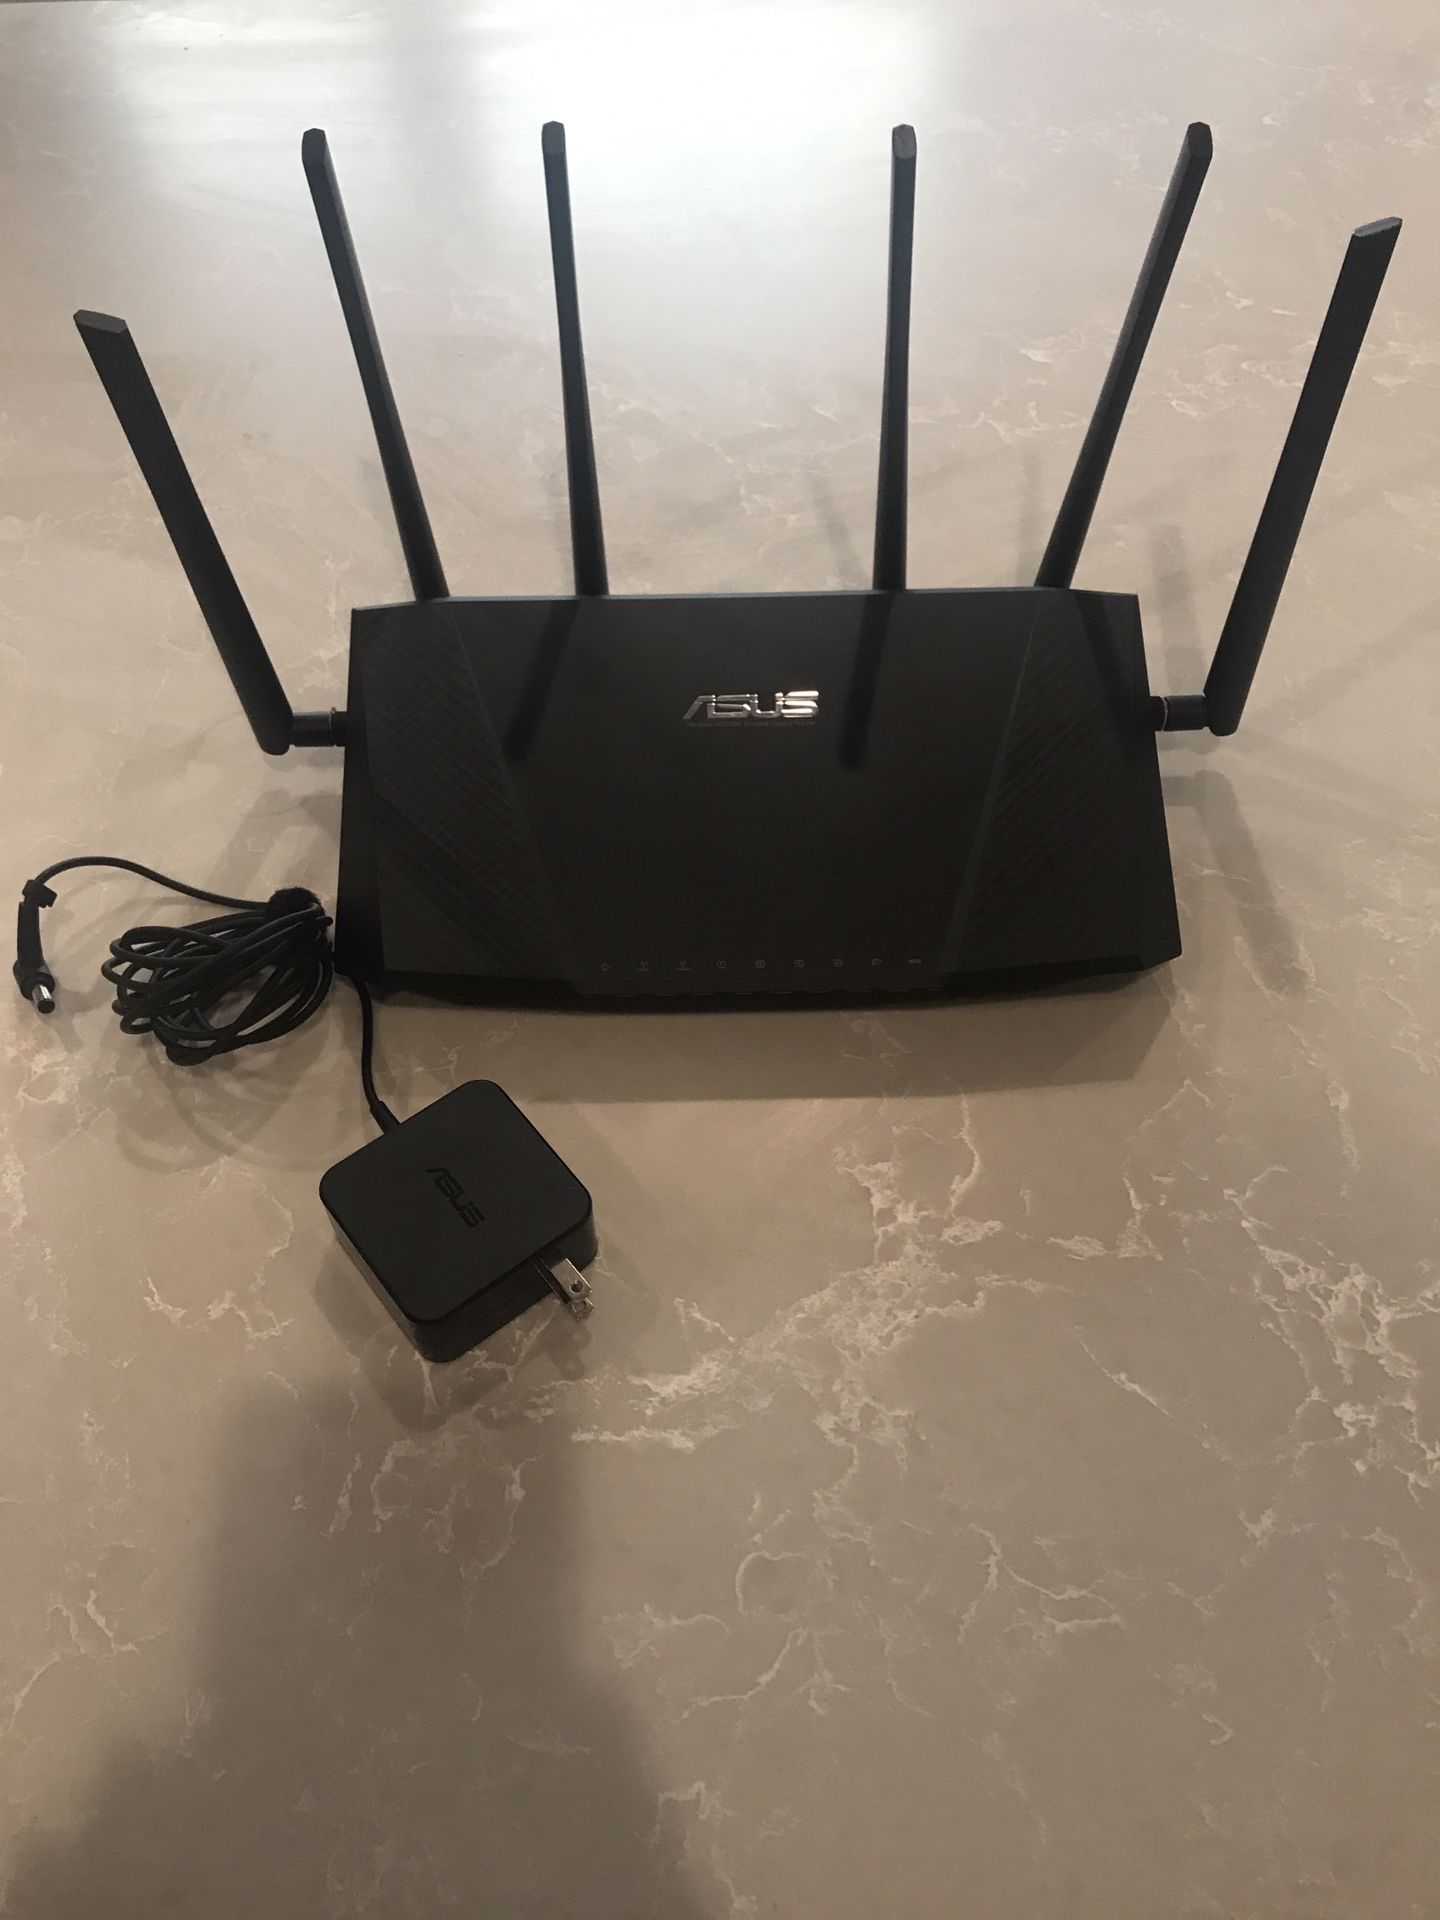 Asus Tri-Band Gigabit Wifi router